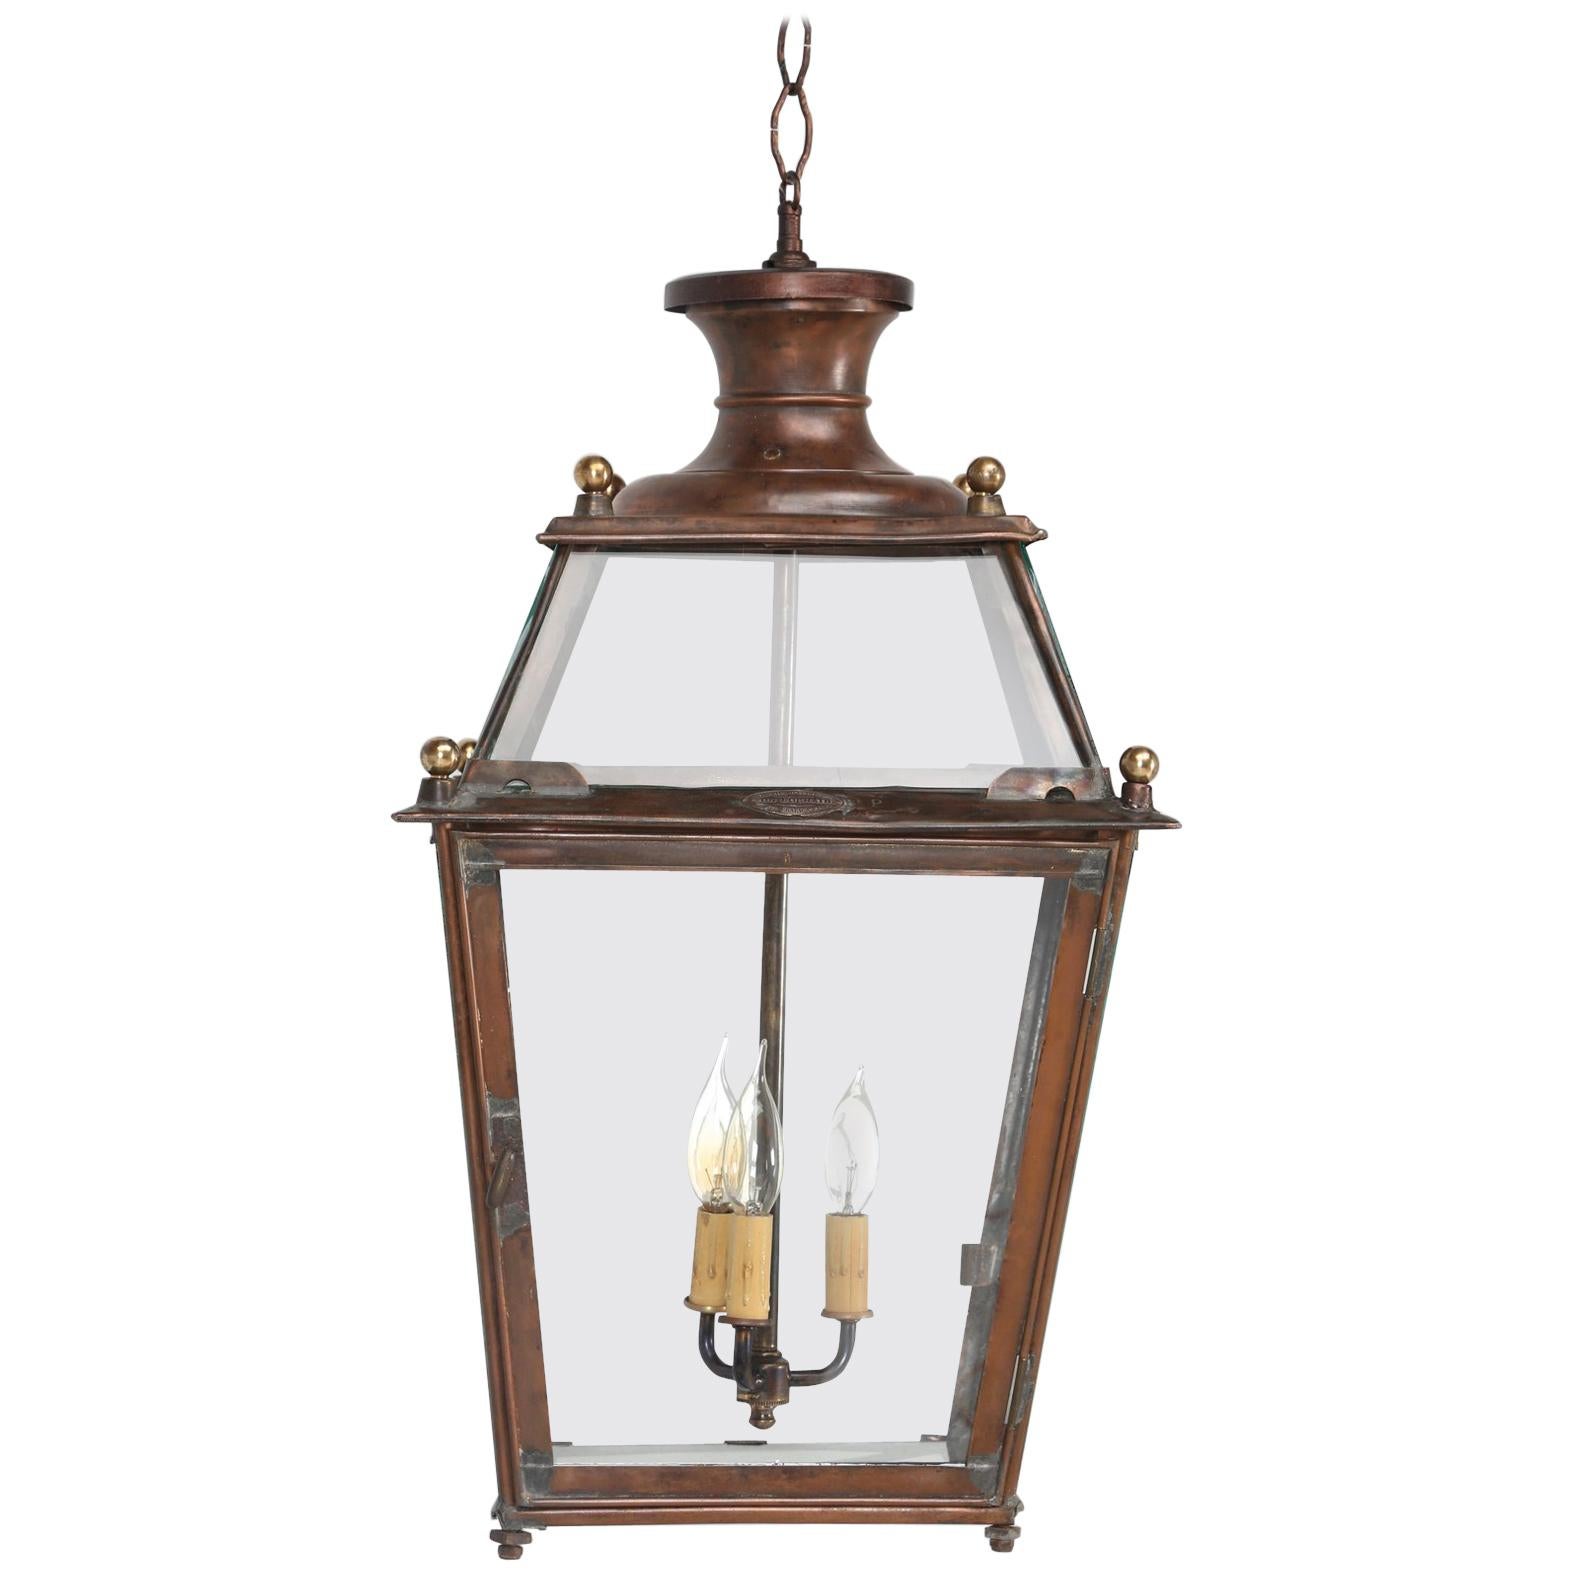 Antique French Copper Lantern, Restored